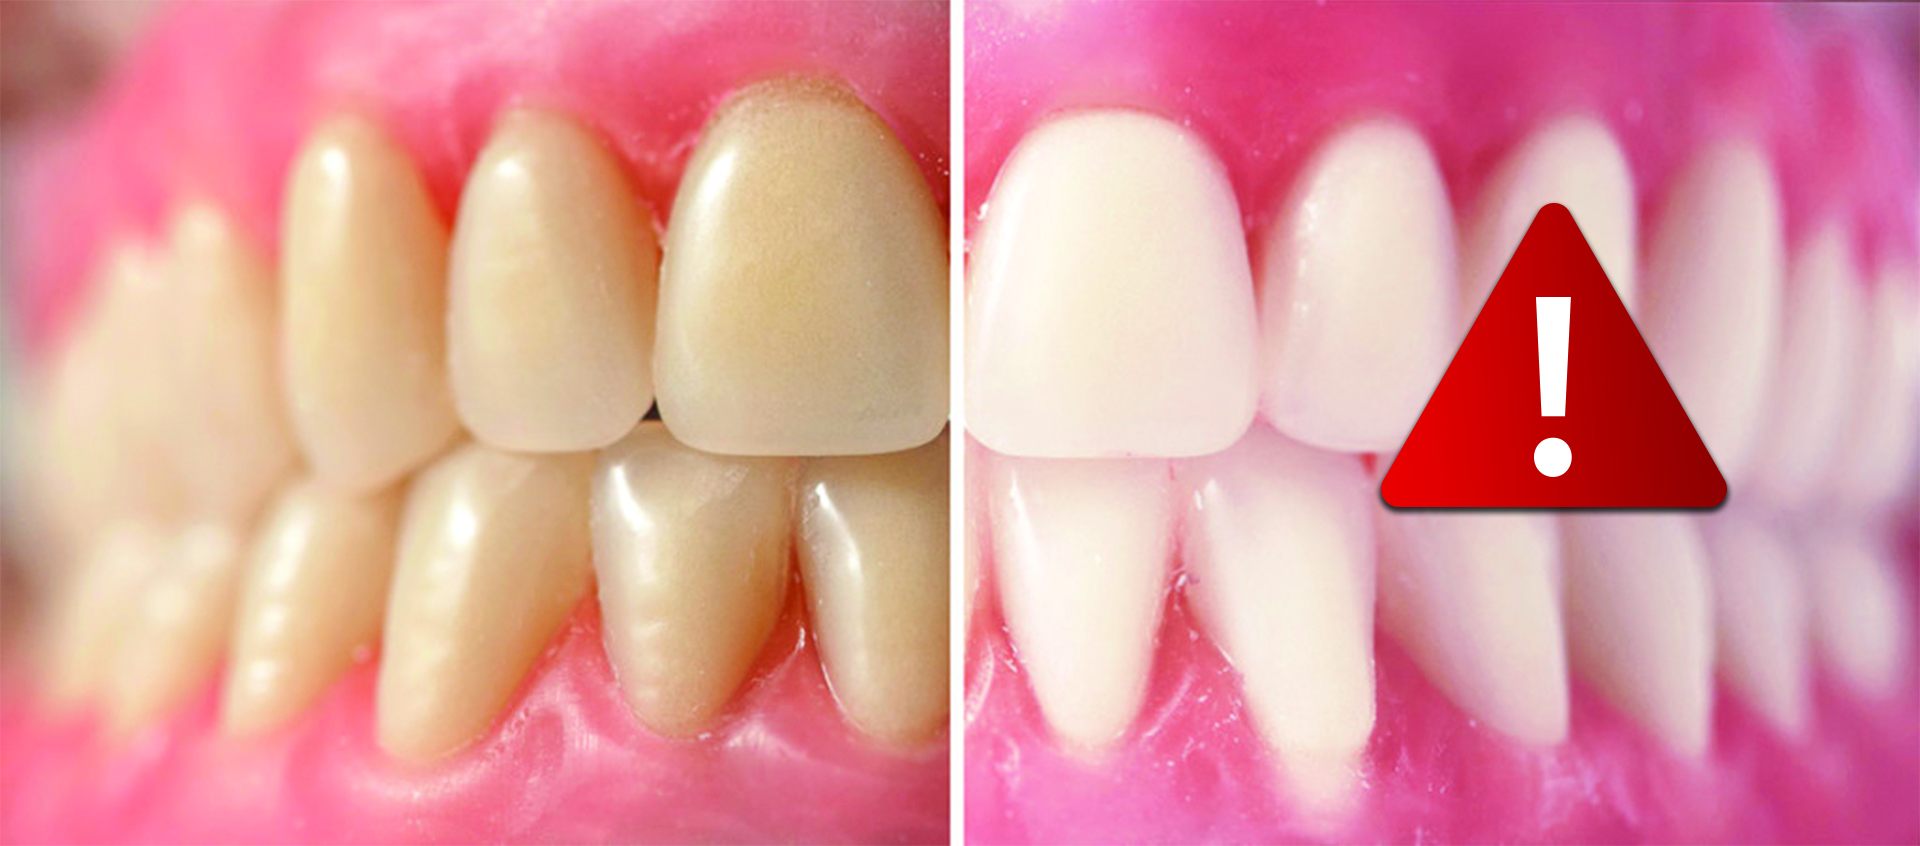 teeth-whitening-dangers